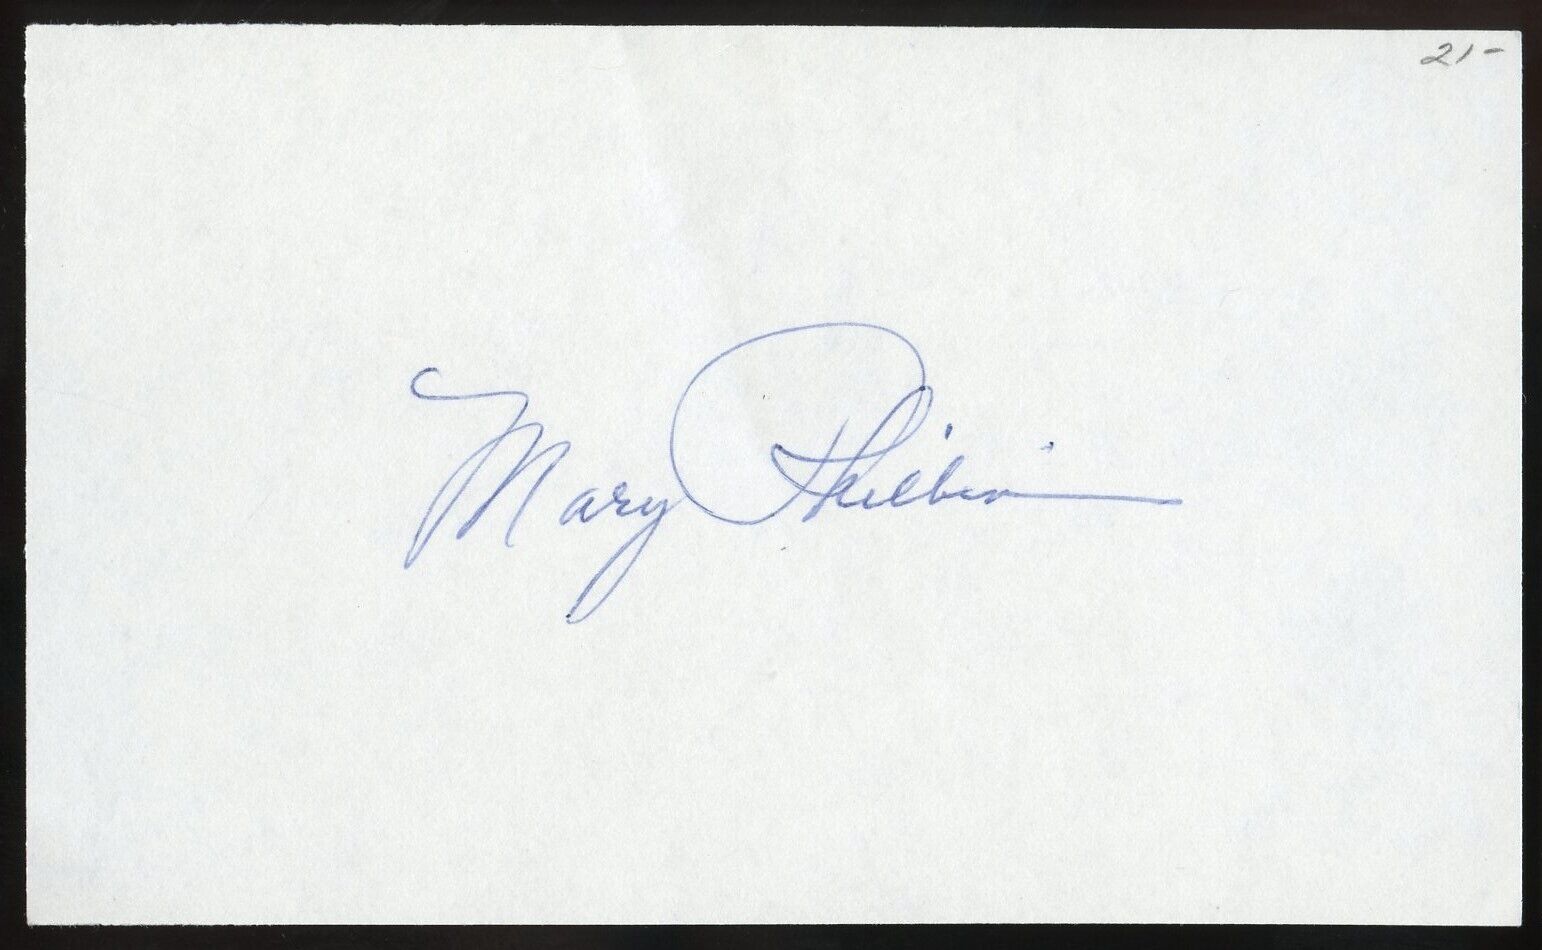 Mary Philbin d1993 signed autograph 3x5 Cut American Actress Silent Film Era